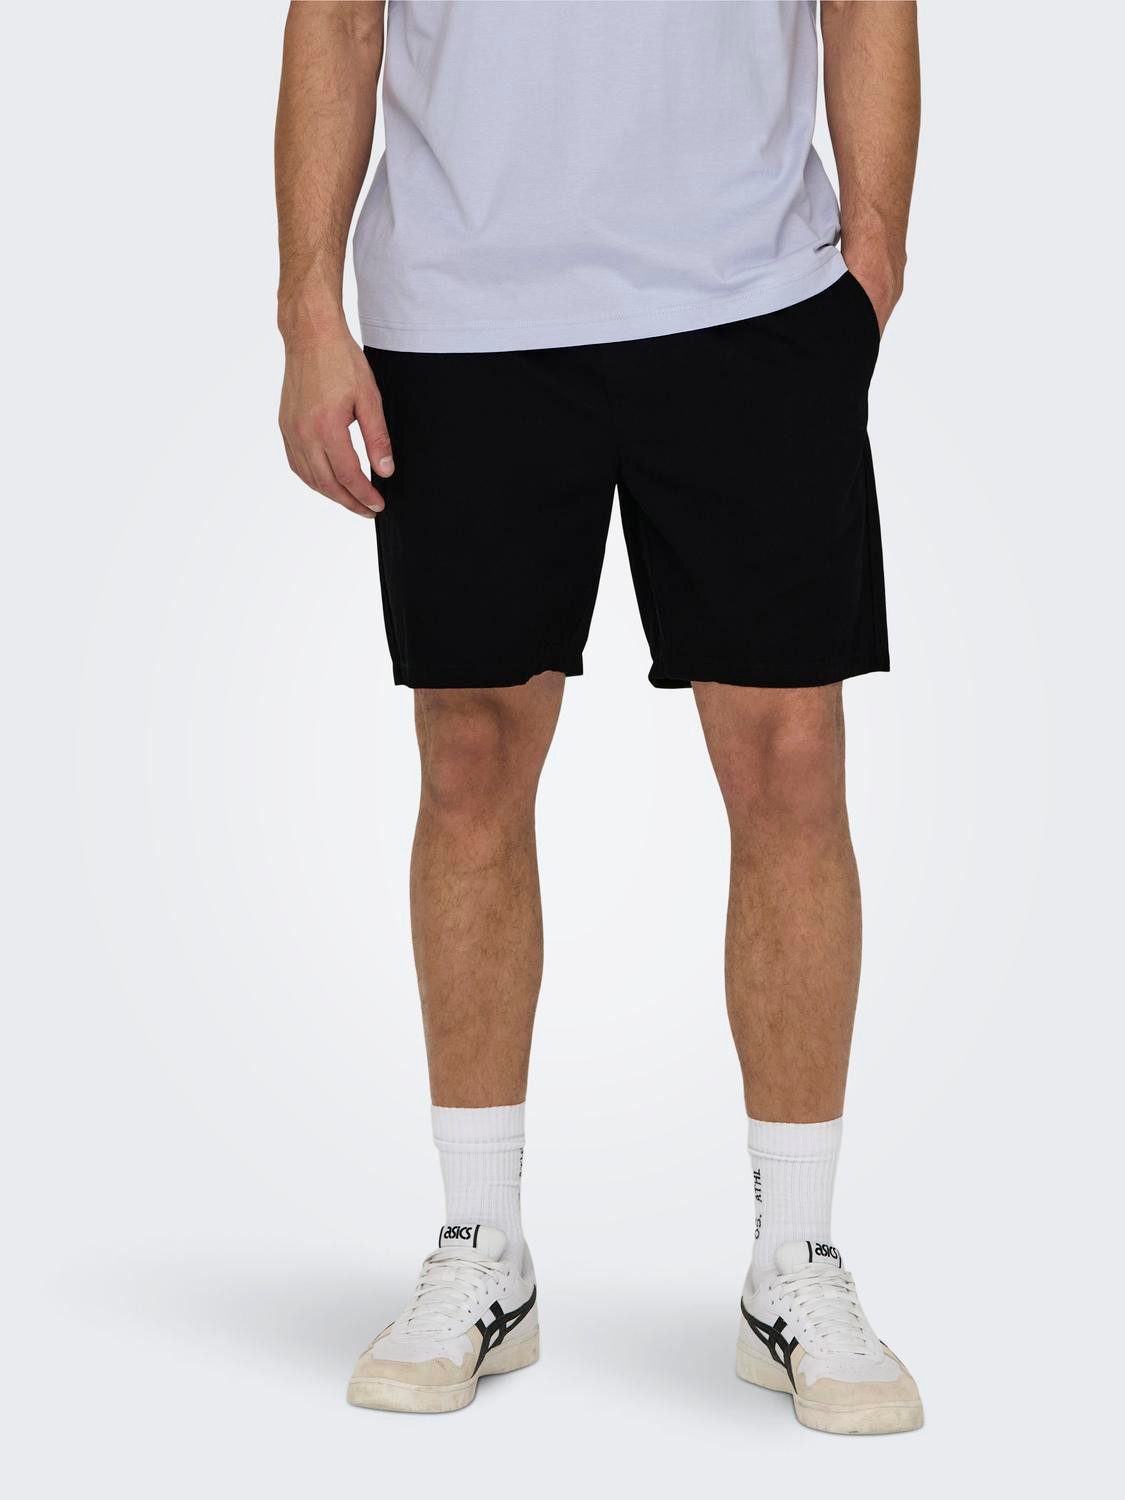 ONLY & SONS Sweatshorts Shorts Bermuda Pants Sommer Hose 7318 in Schwarz